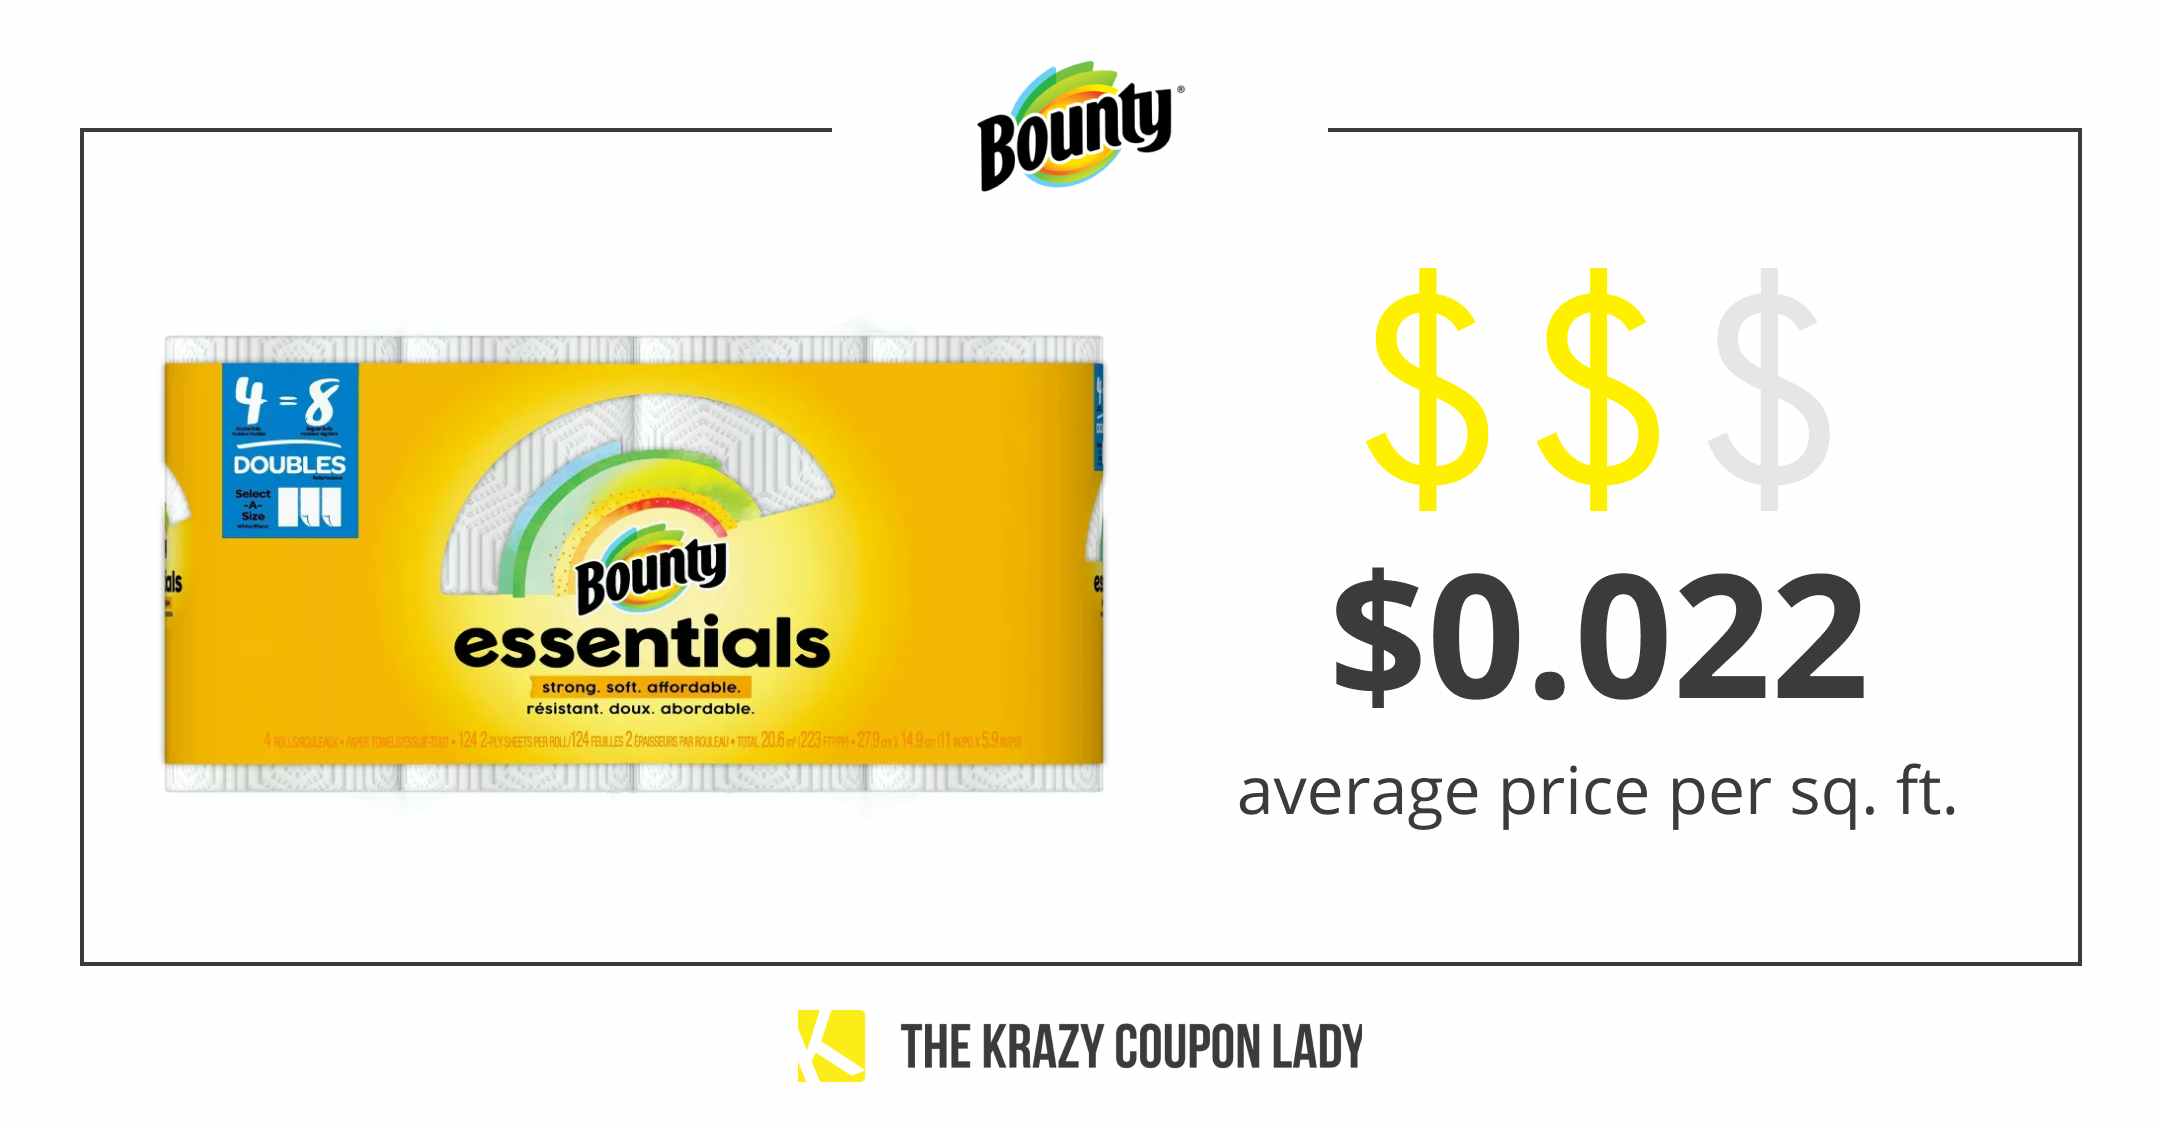 bounty essentials paper towels average price per square foot graphic